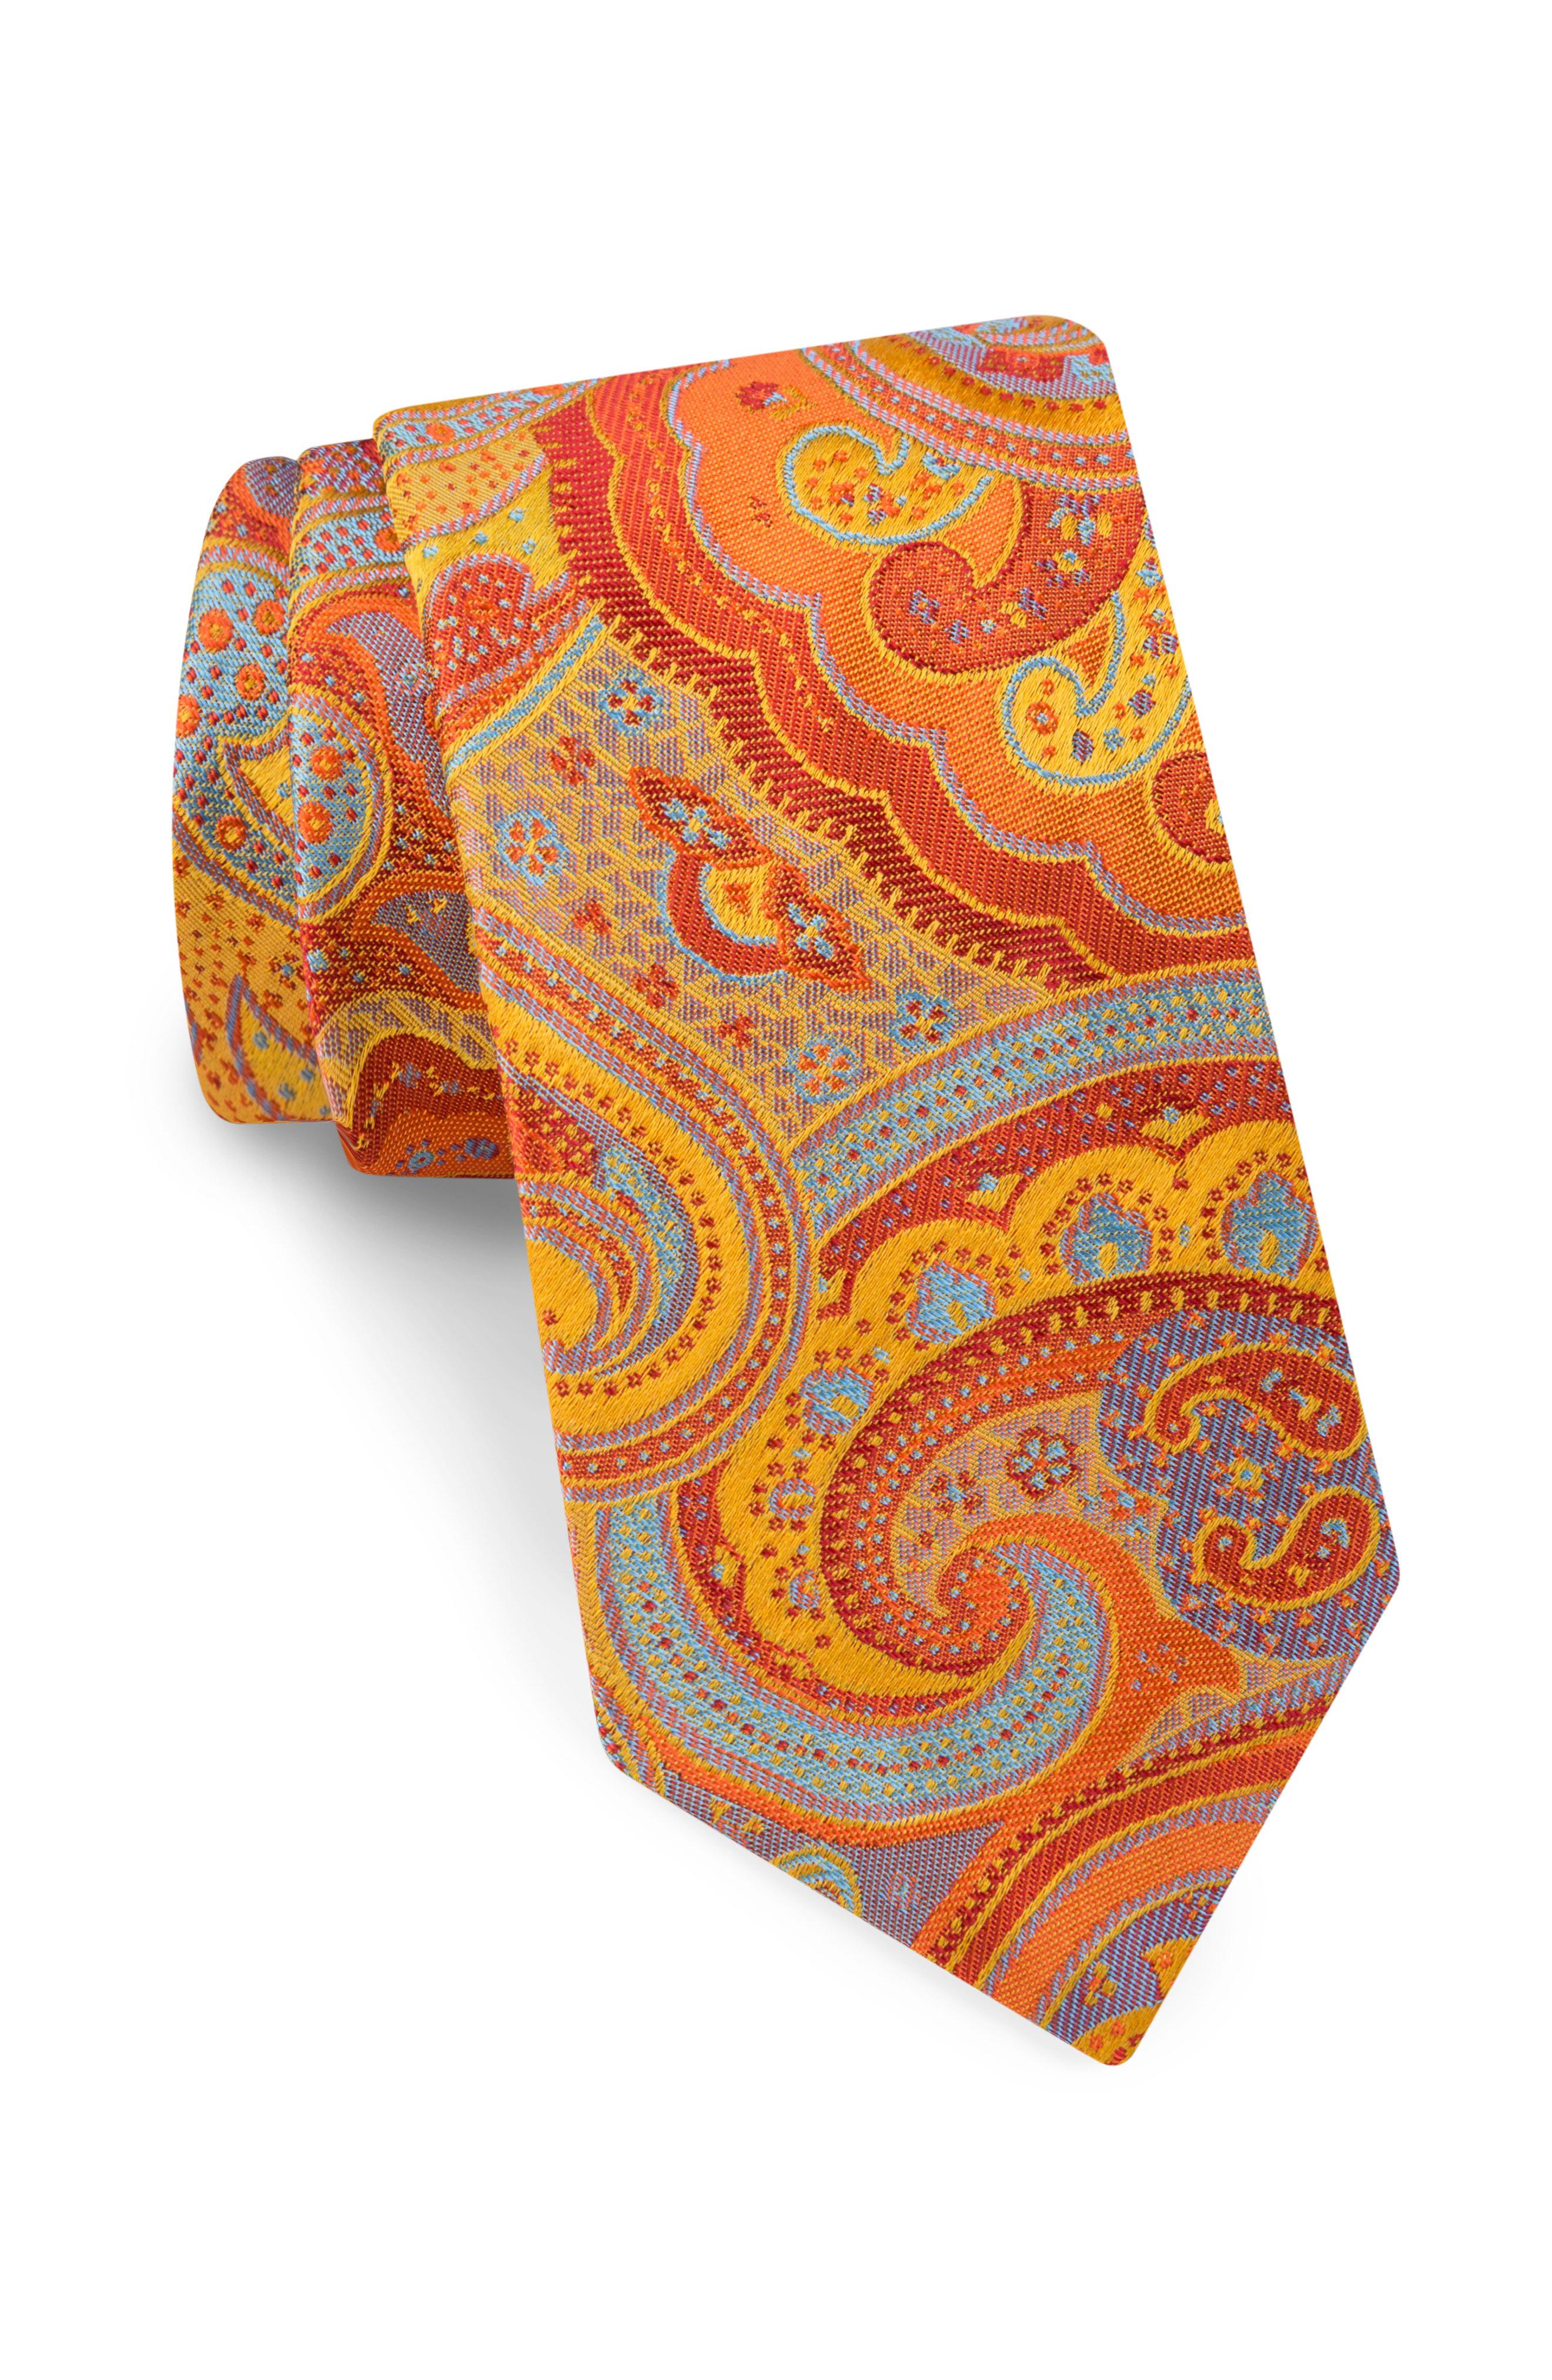 Ted Baker Elegant Paisley Silk Tie in Orange for Men - Lyst